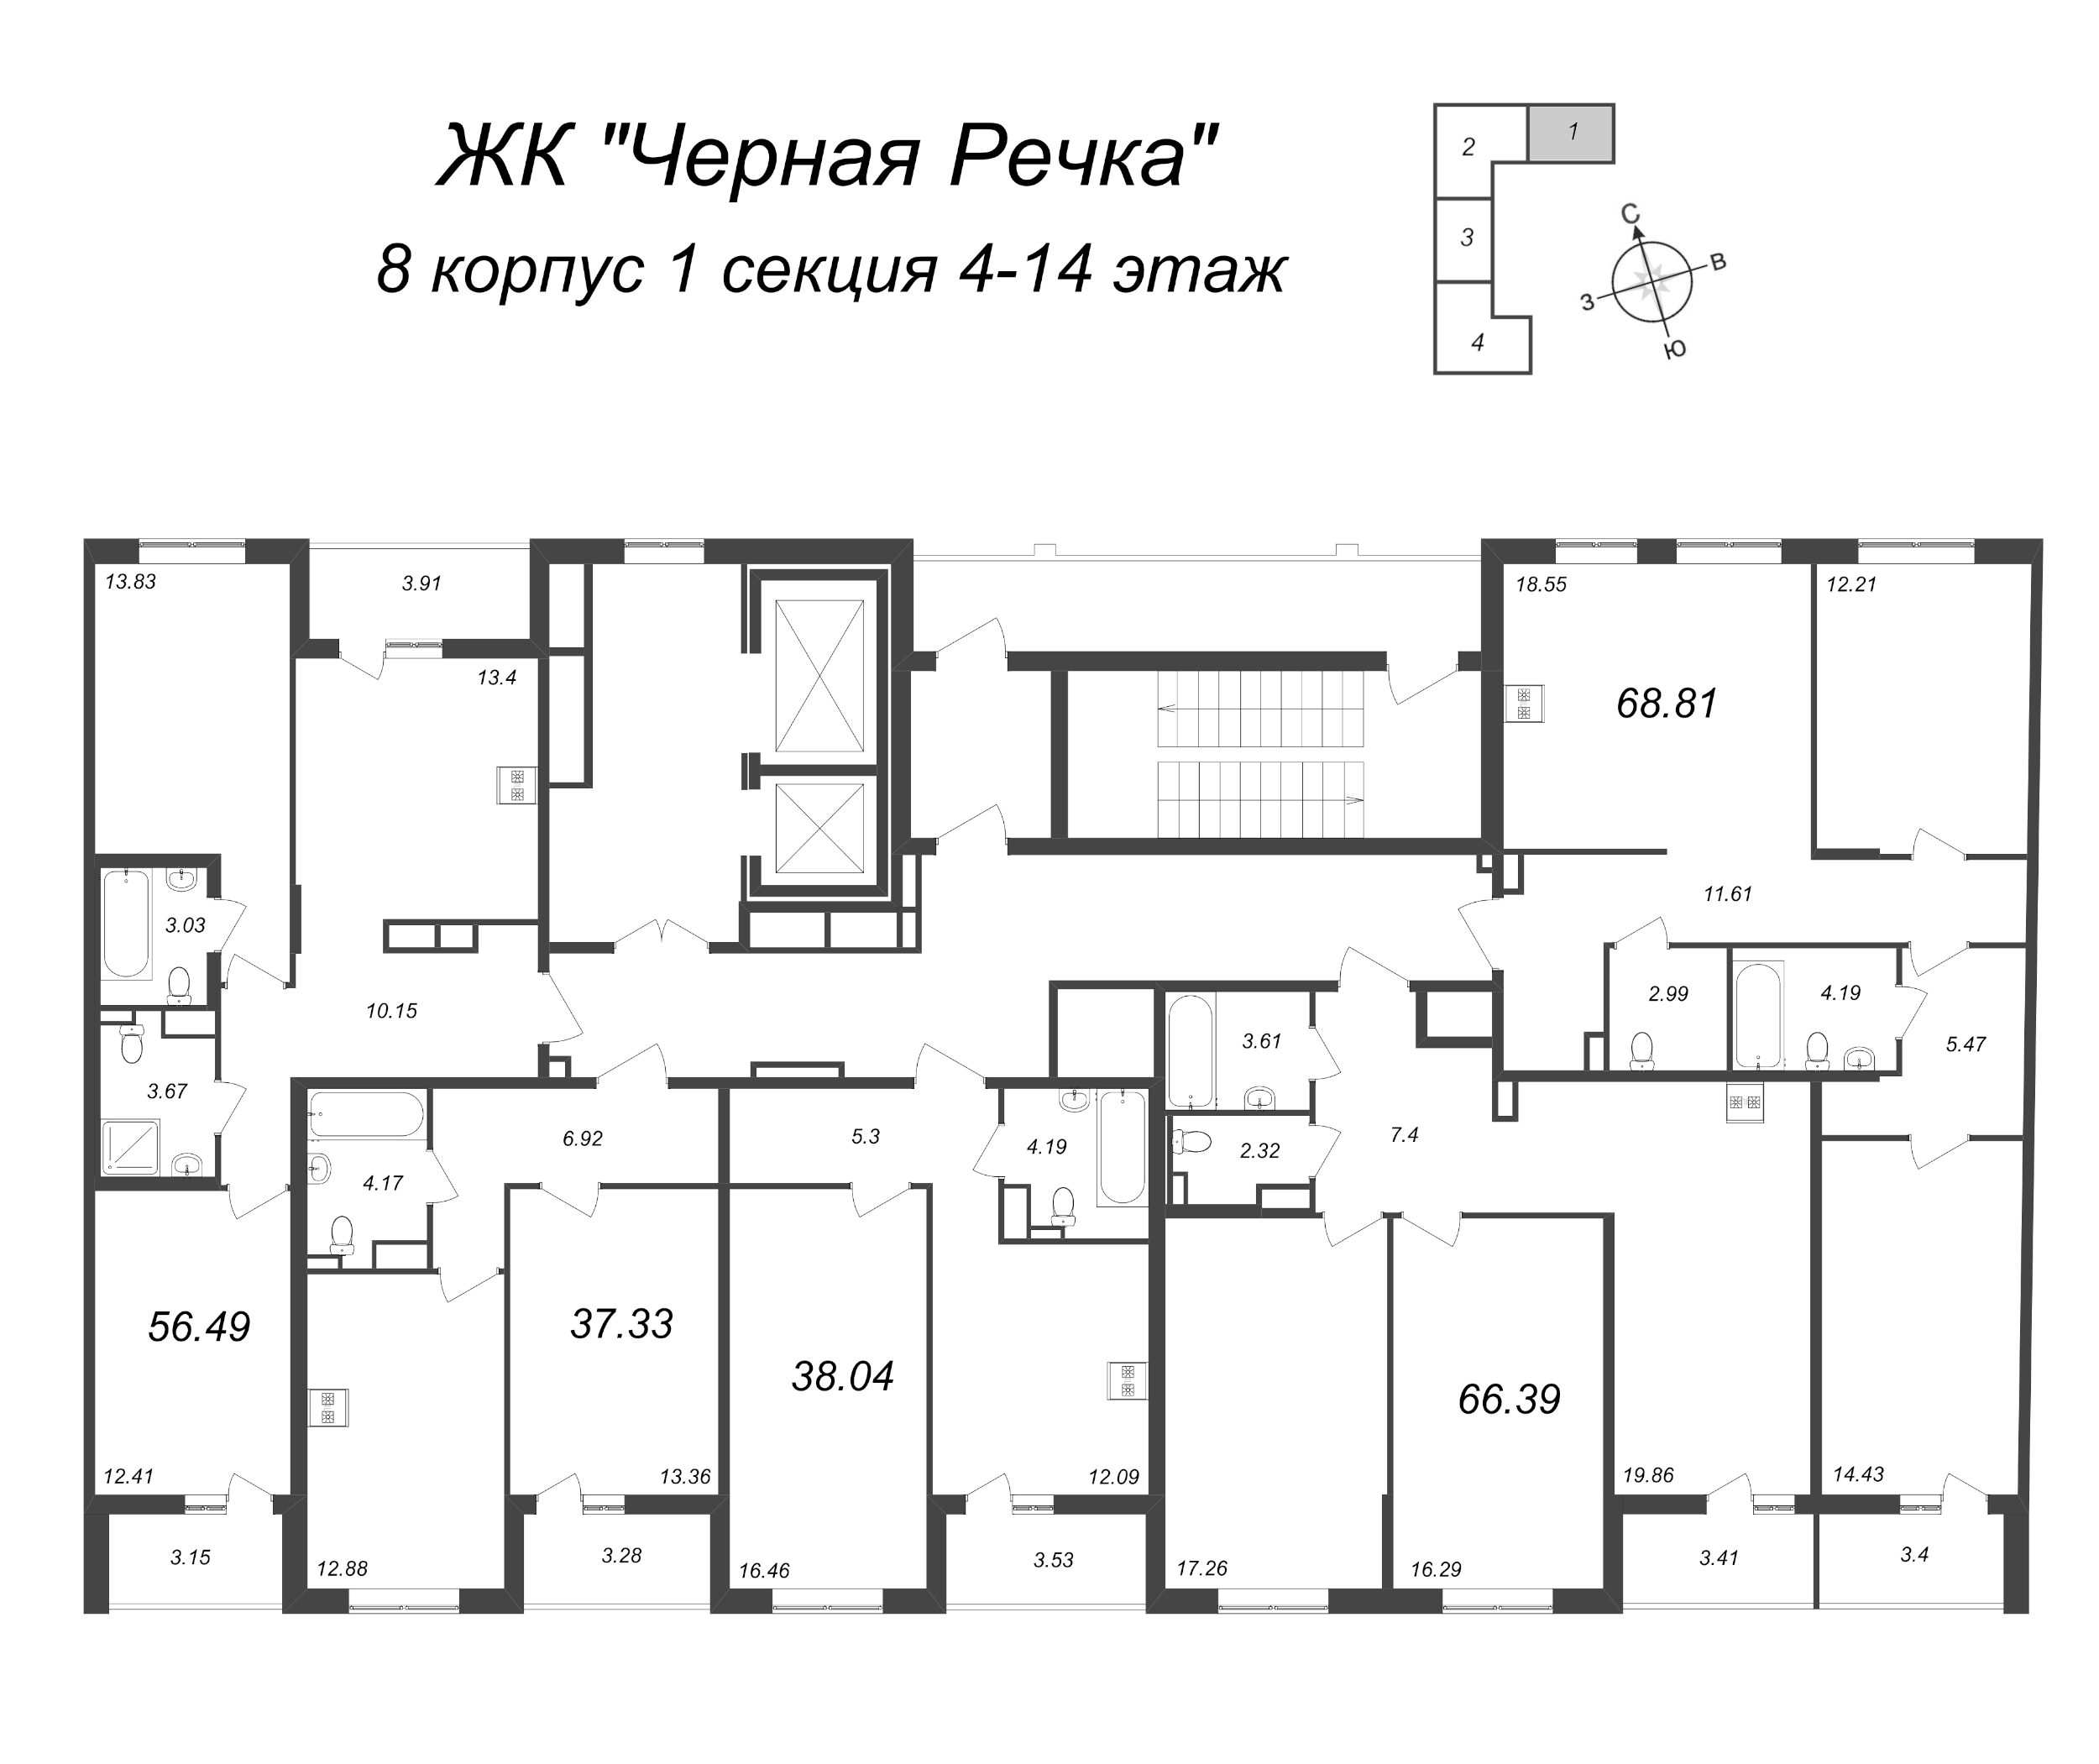 1-комнатная квартира, 38.04 м² в ЖК "Чёрная речка от Ильича" - планировка этажа